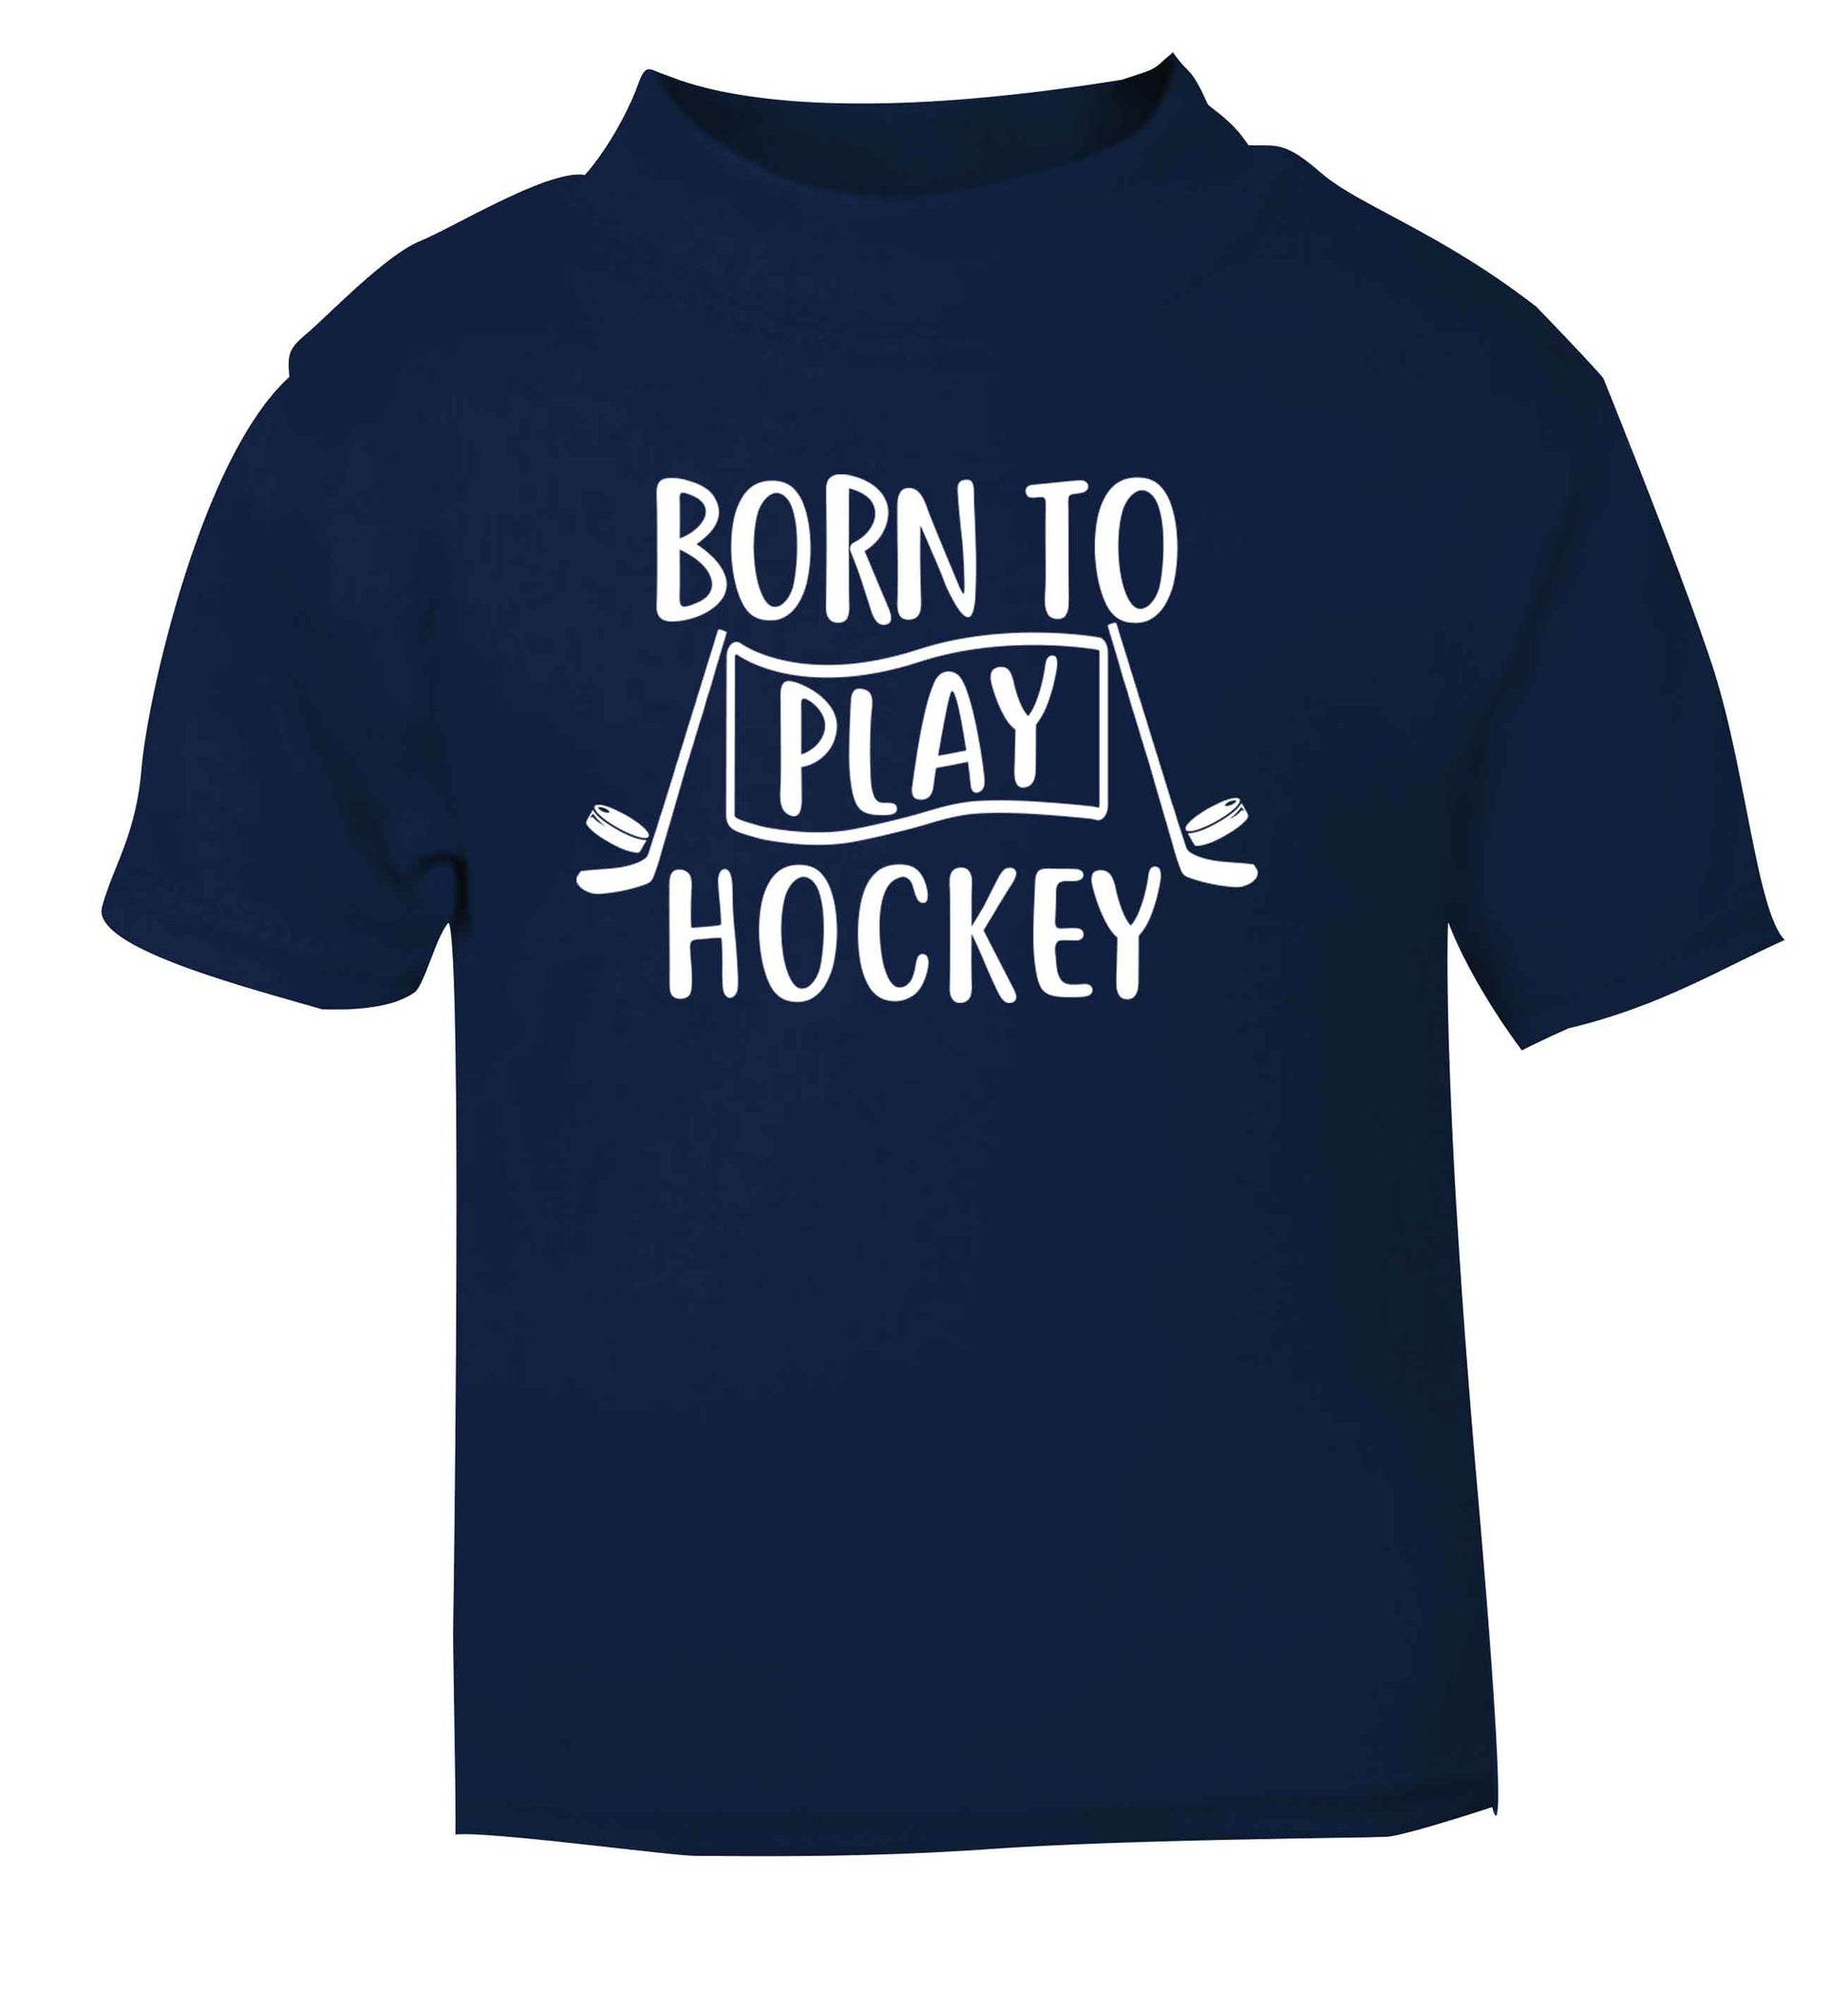 Born to play hockey navy Baby Toddler Tshirt 2 Years